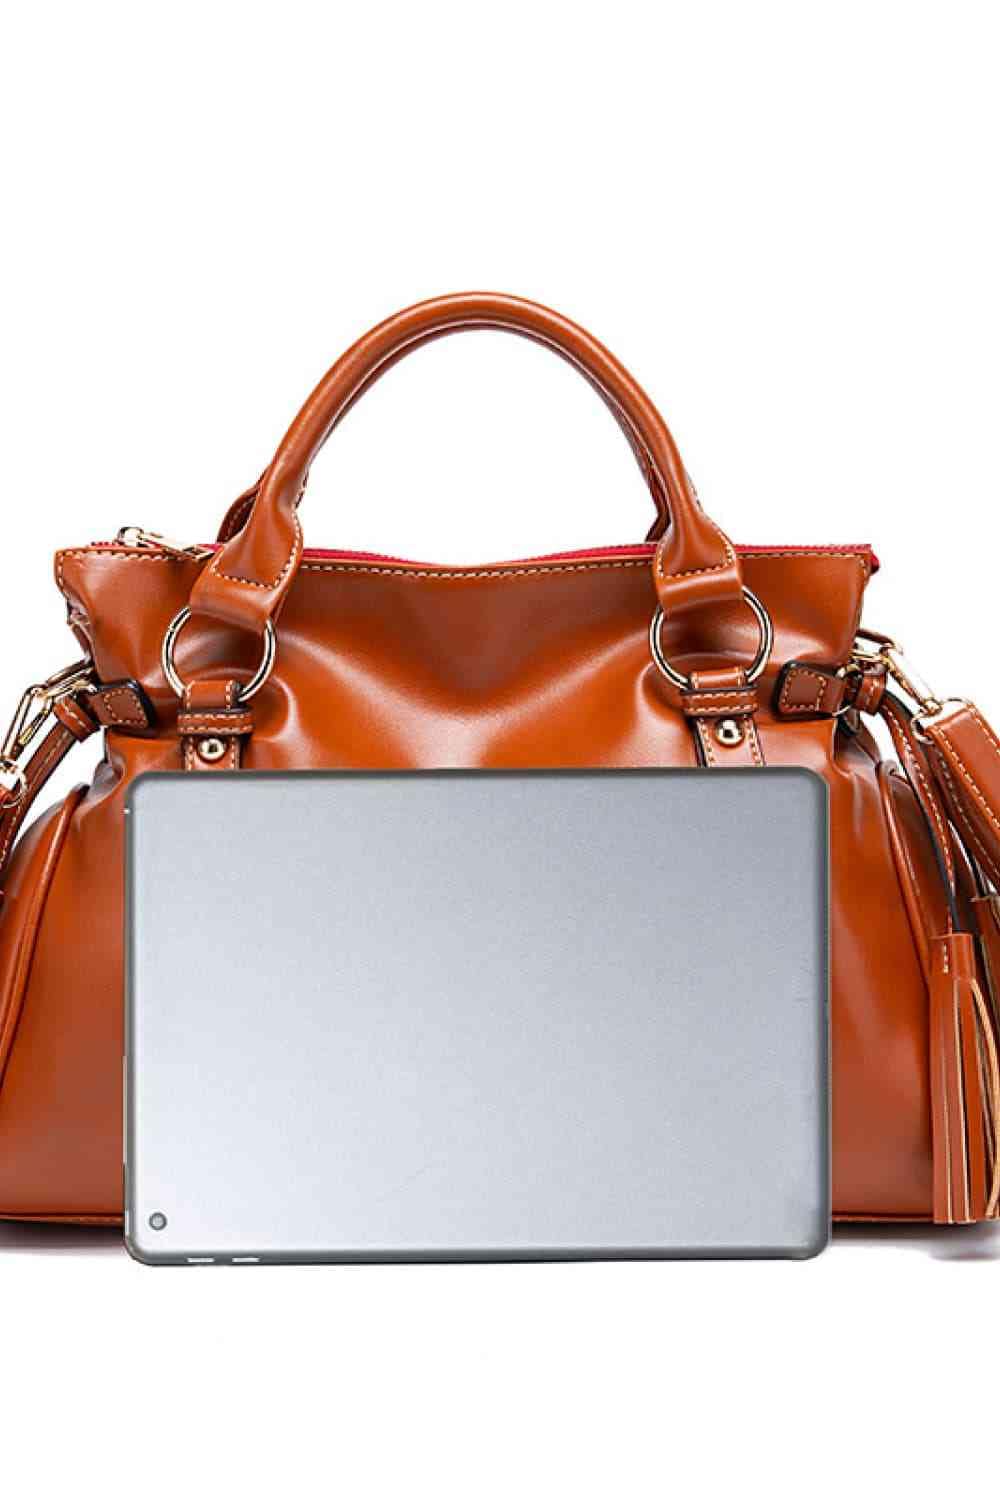 Vegan Leather Handbag with Tassels